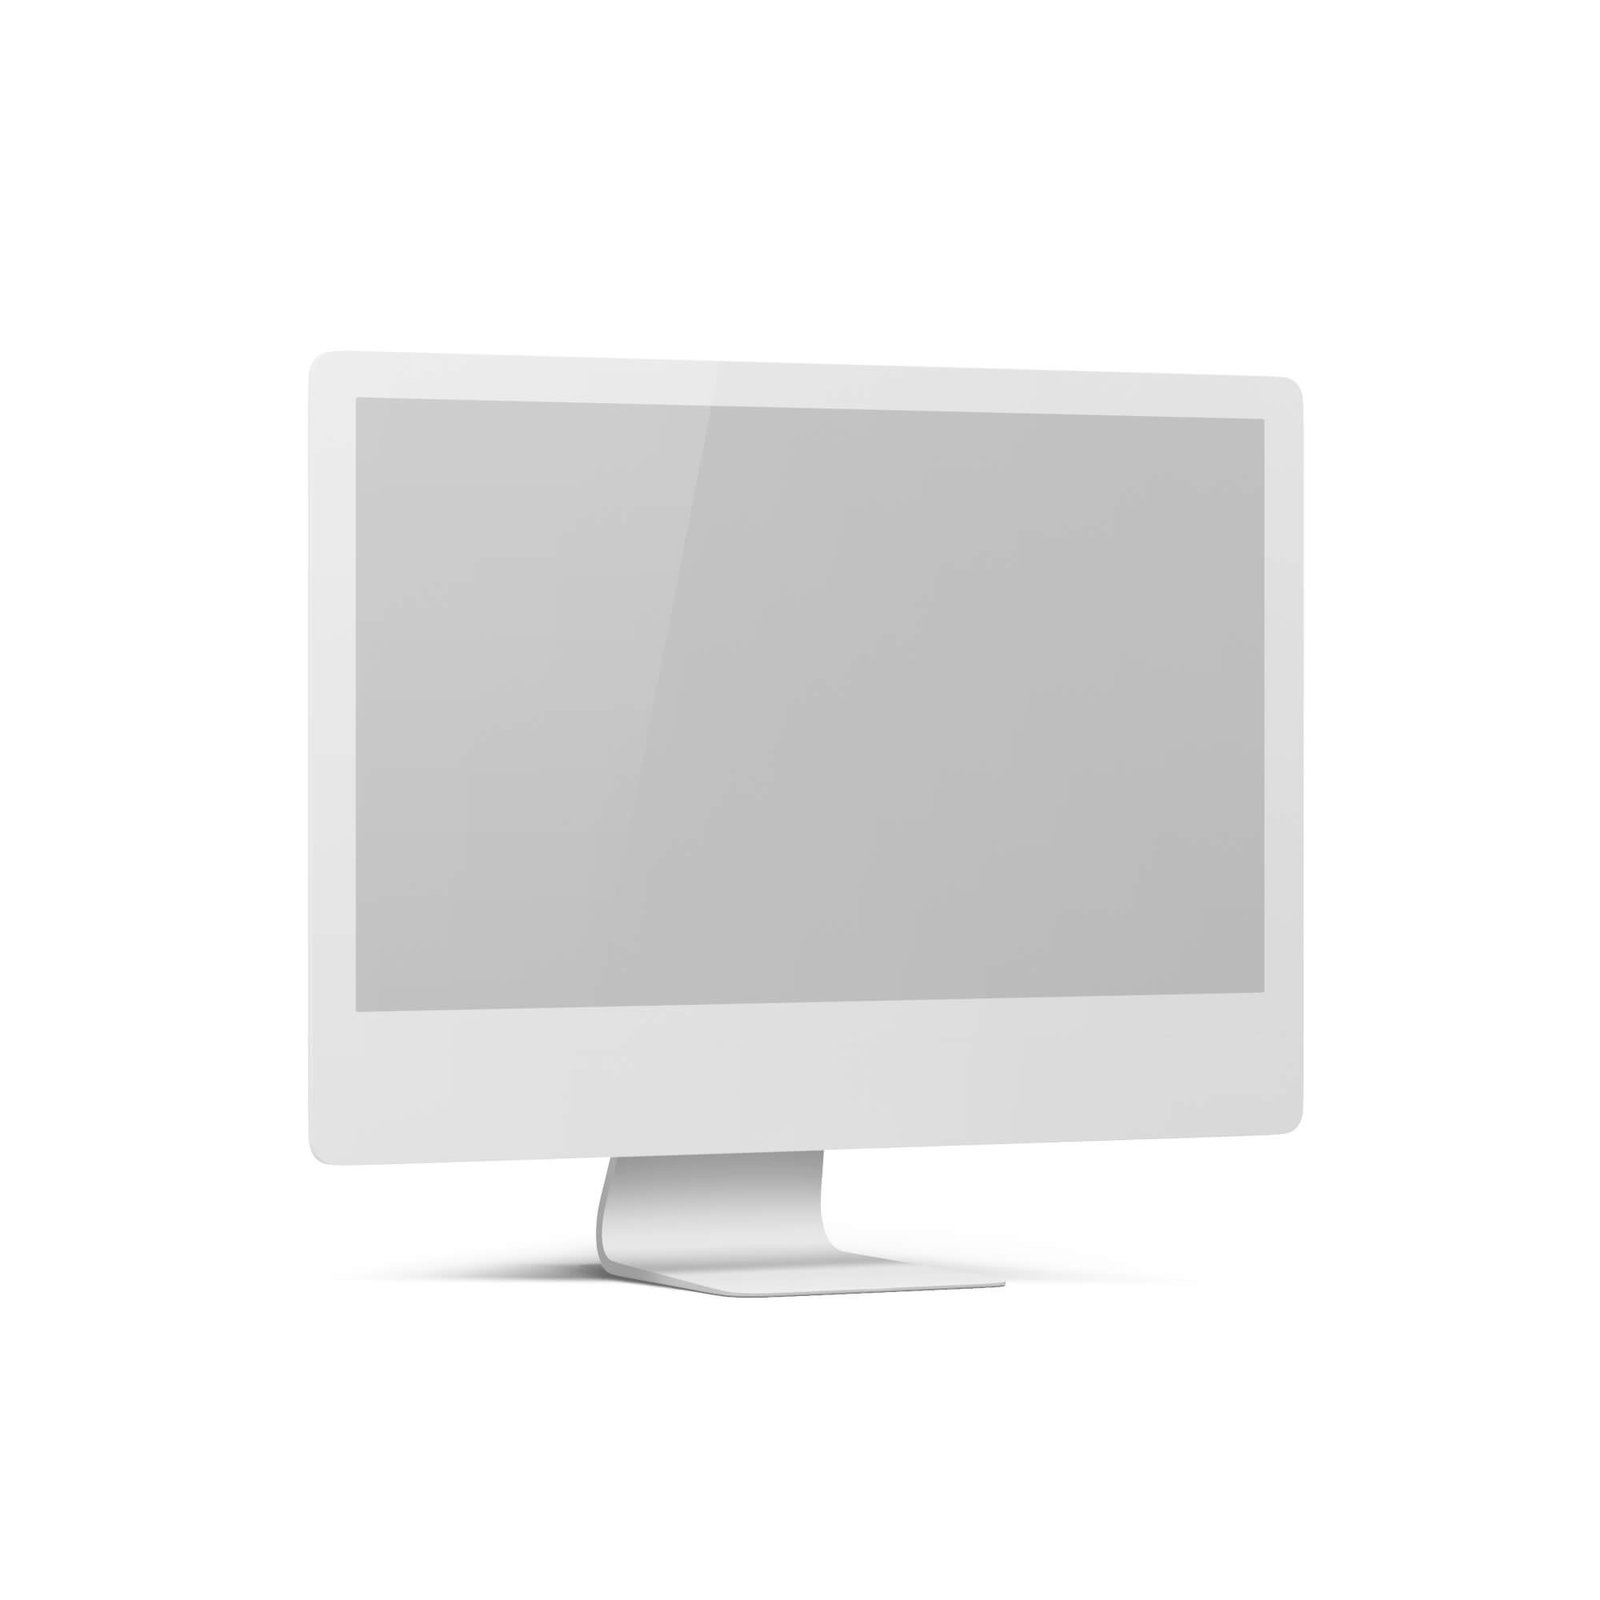 Blank Free Desktop Screen Mockup PSD Template